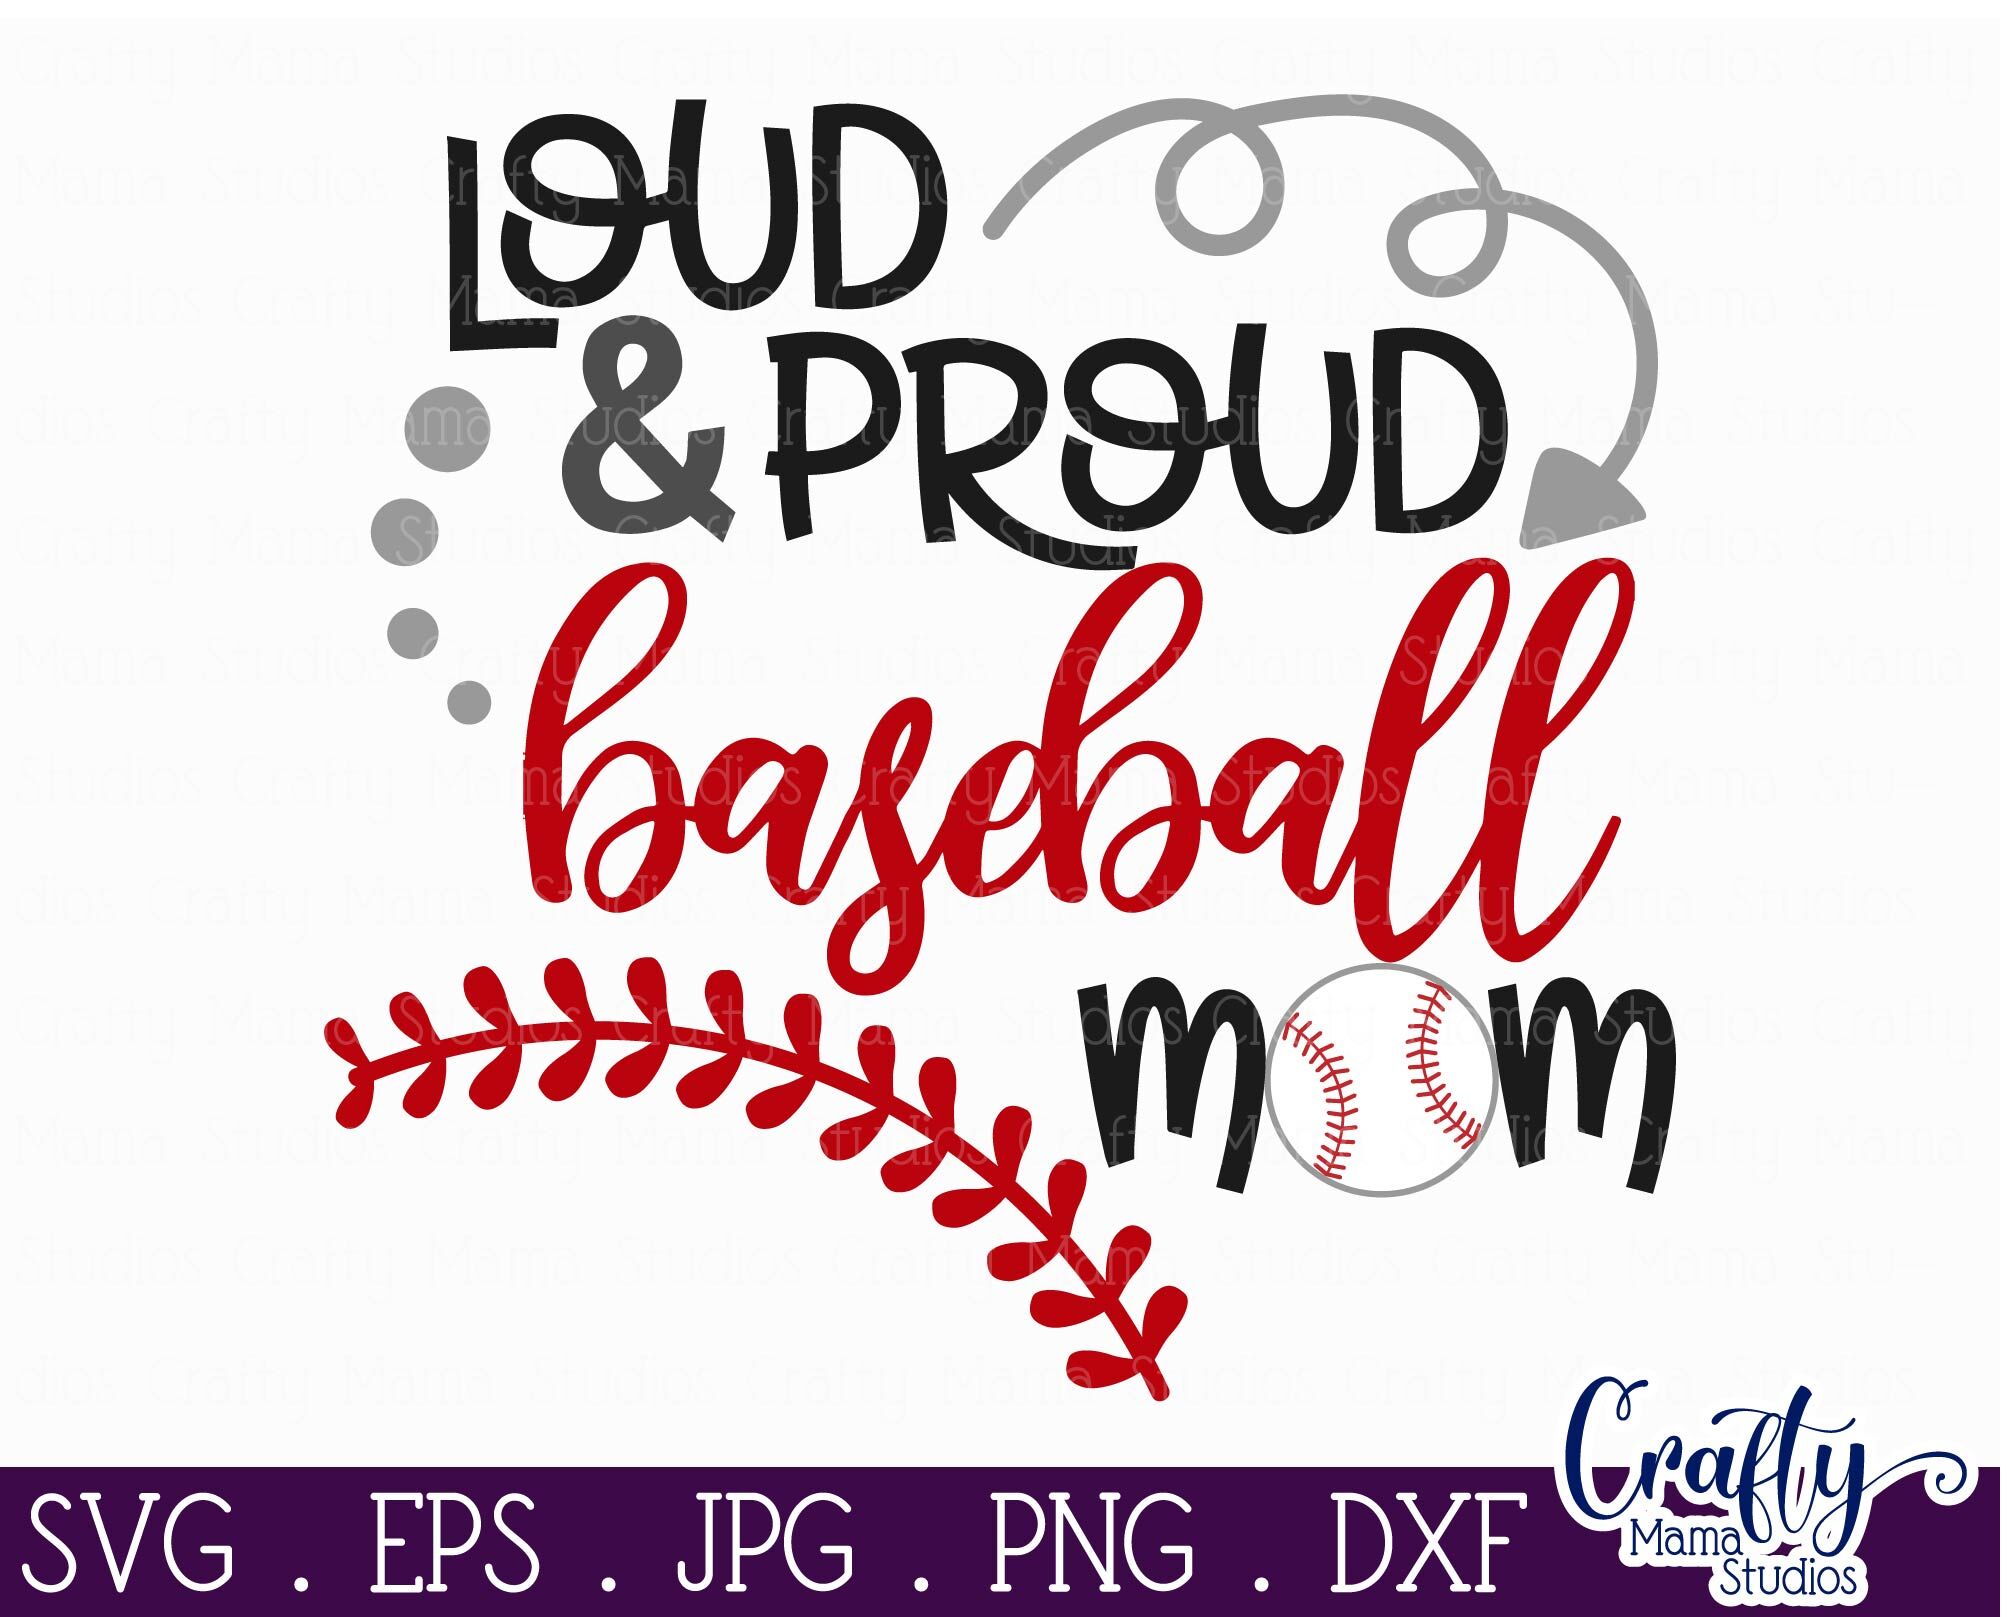 Loud and Proud Baseball Mom Svg, Mom Life Svg By Crafty Mama Studios